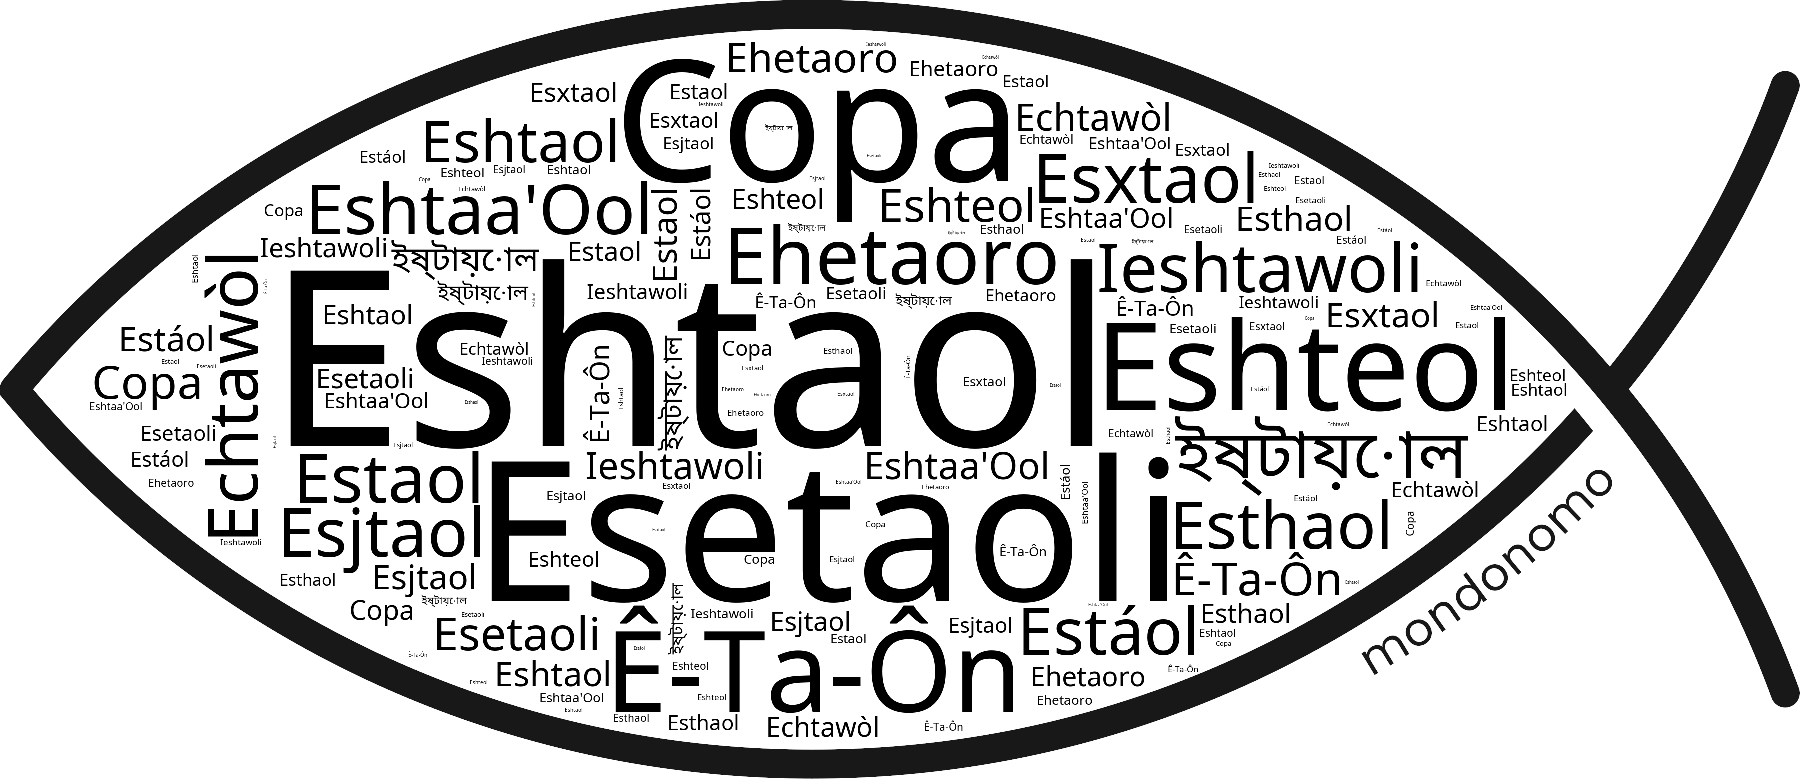 Name Eshtaol in the world's Bibles